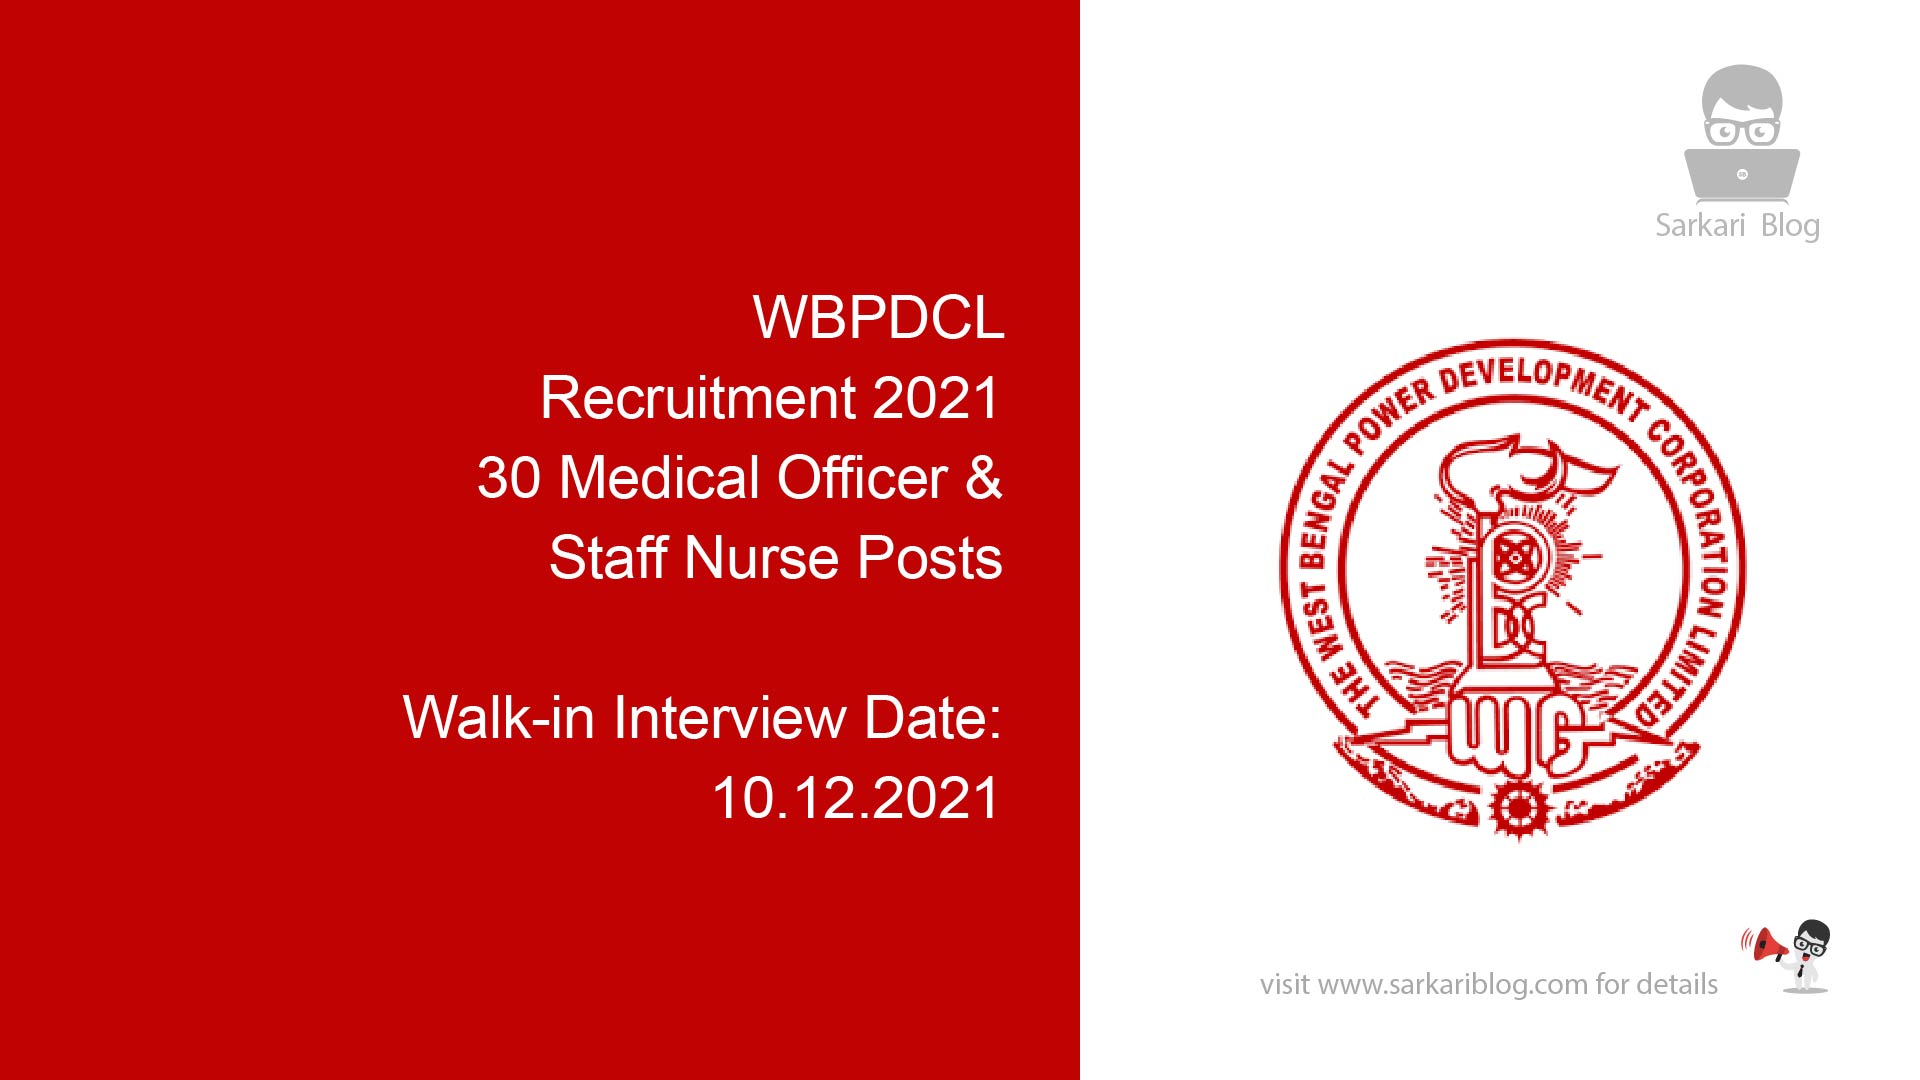 WBPDCL Recruitment 2021